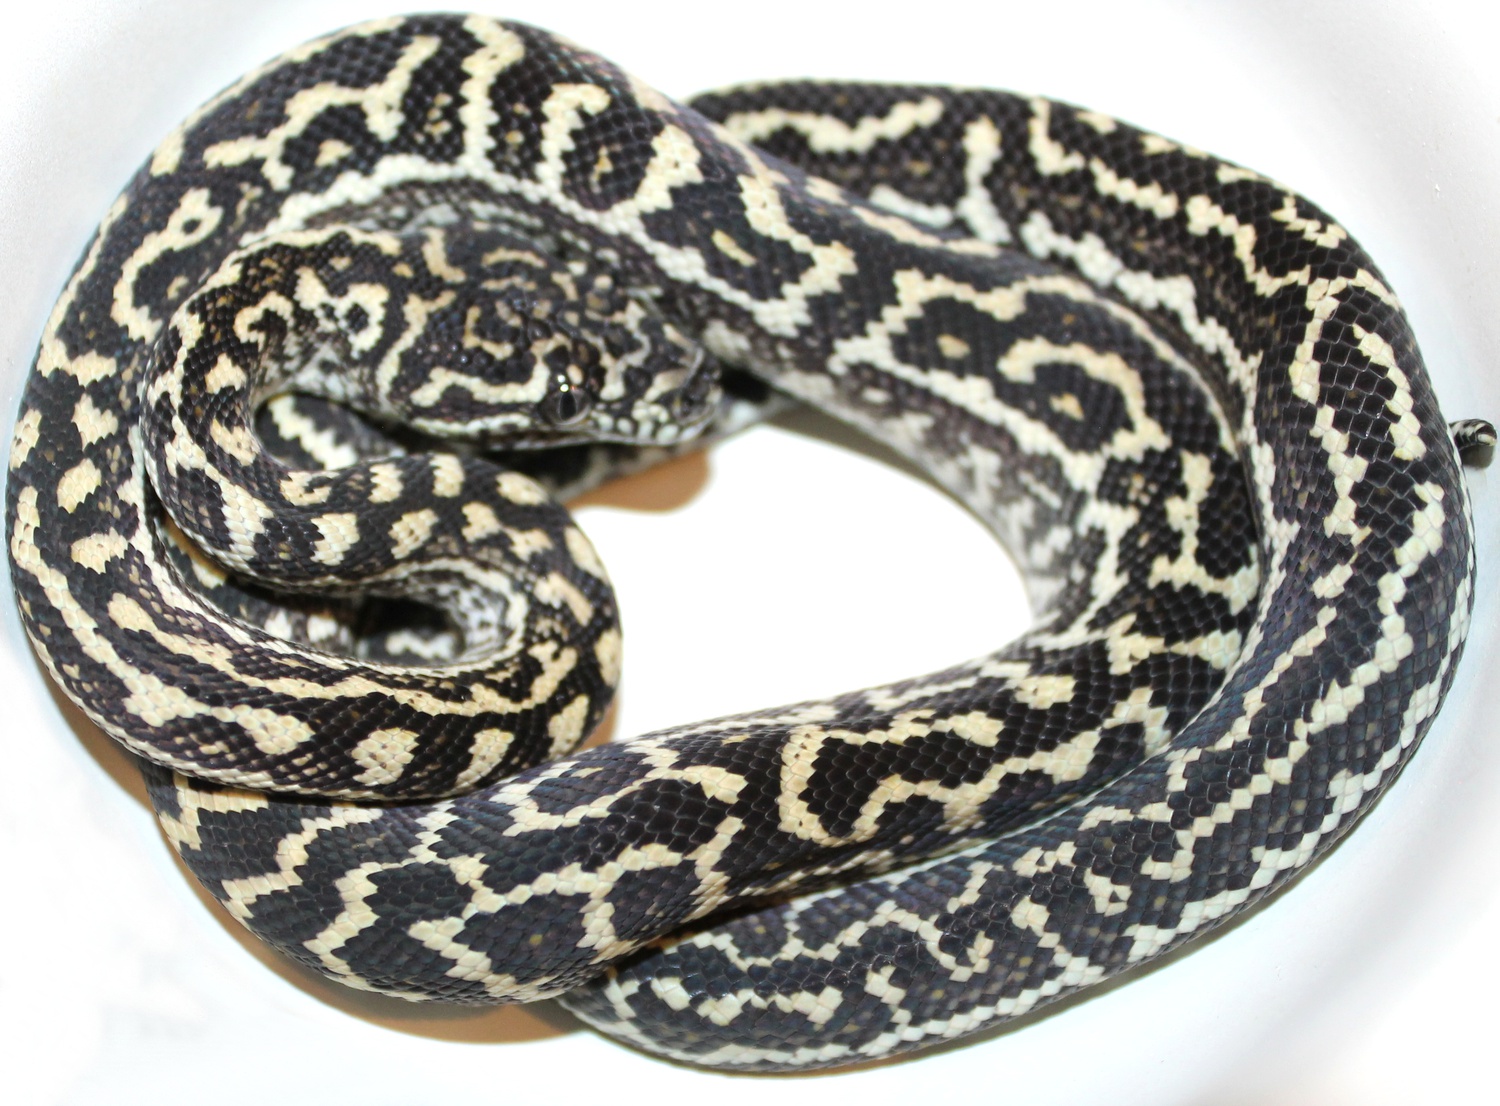 Ivory Zebra Jungle Carpet Python by Inland Reptile